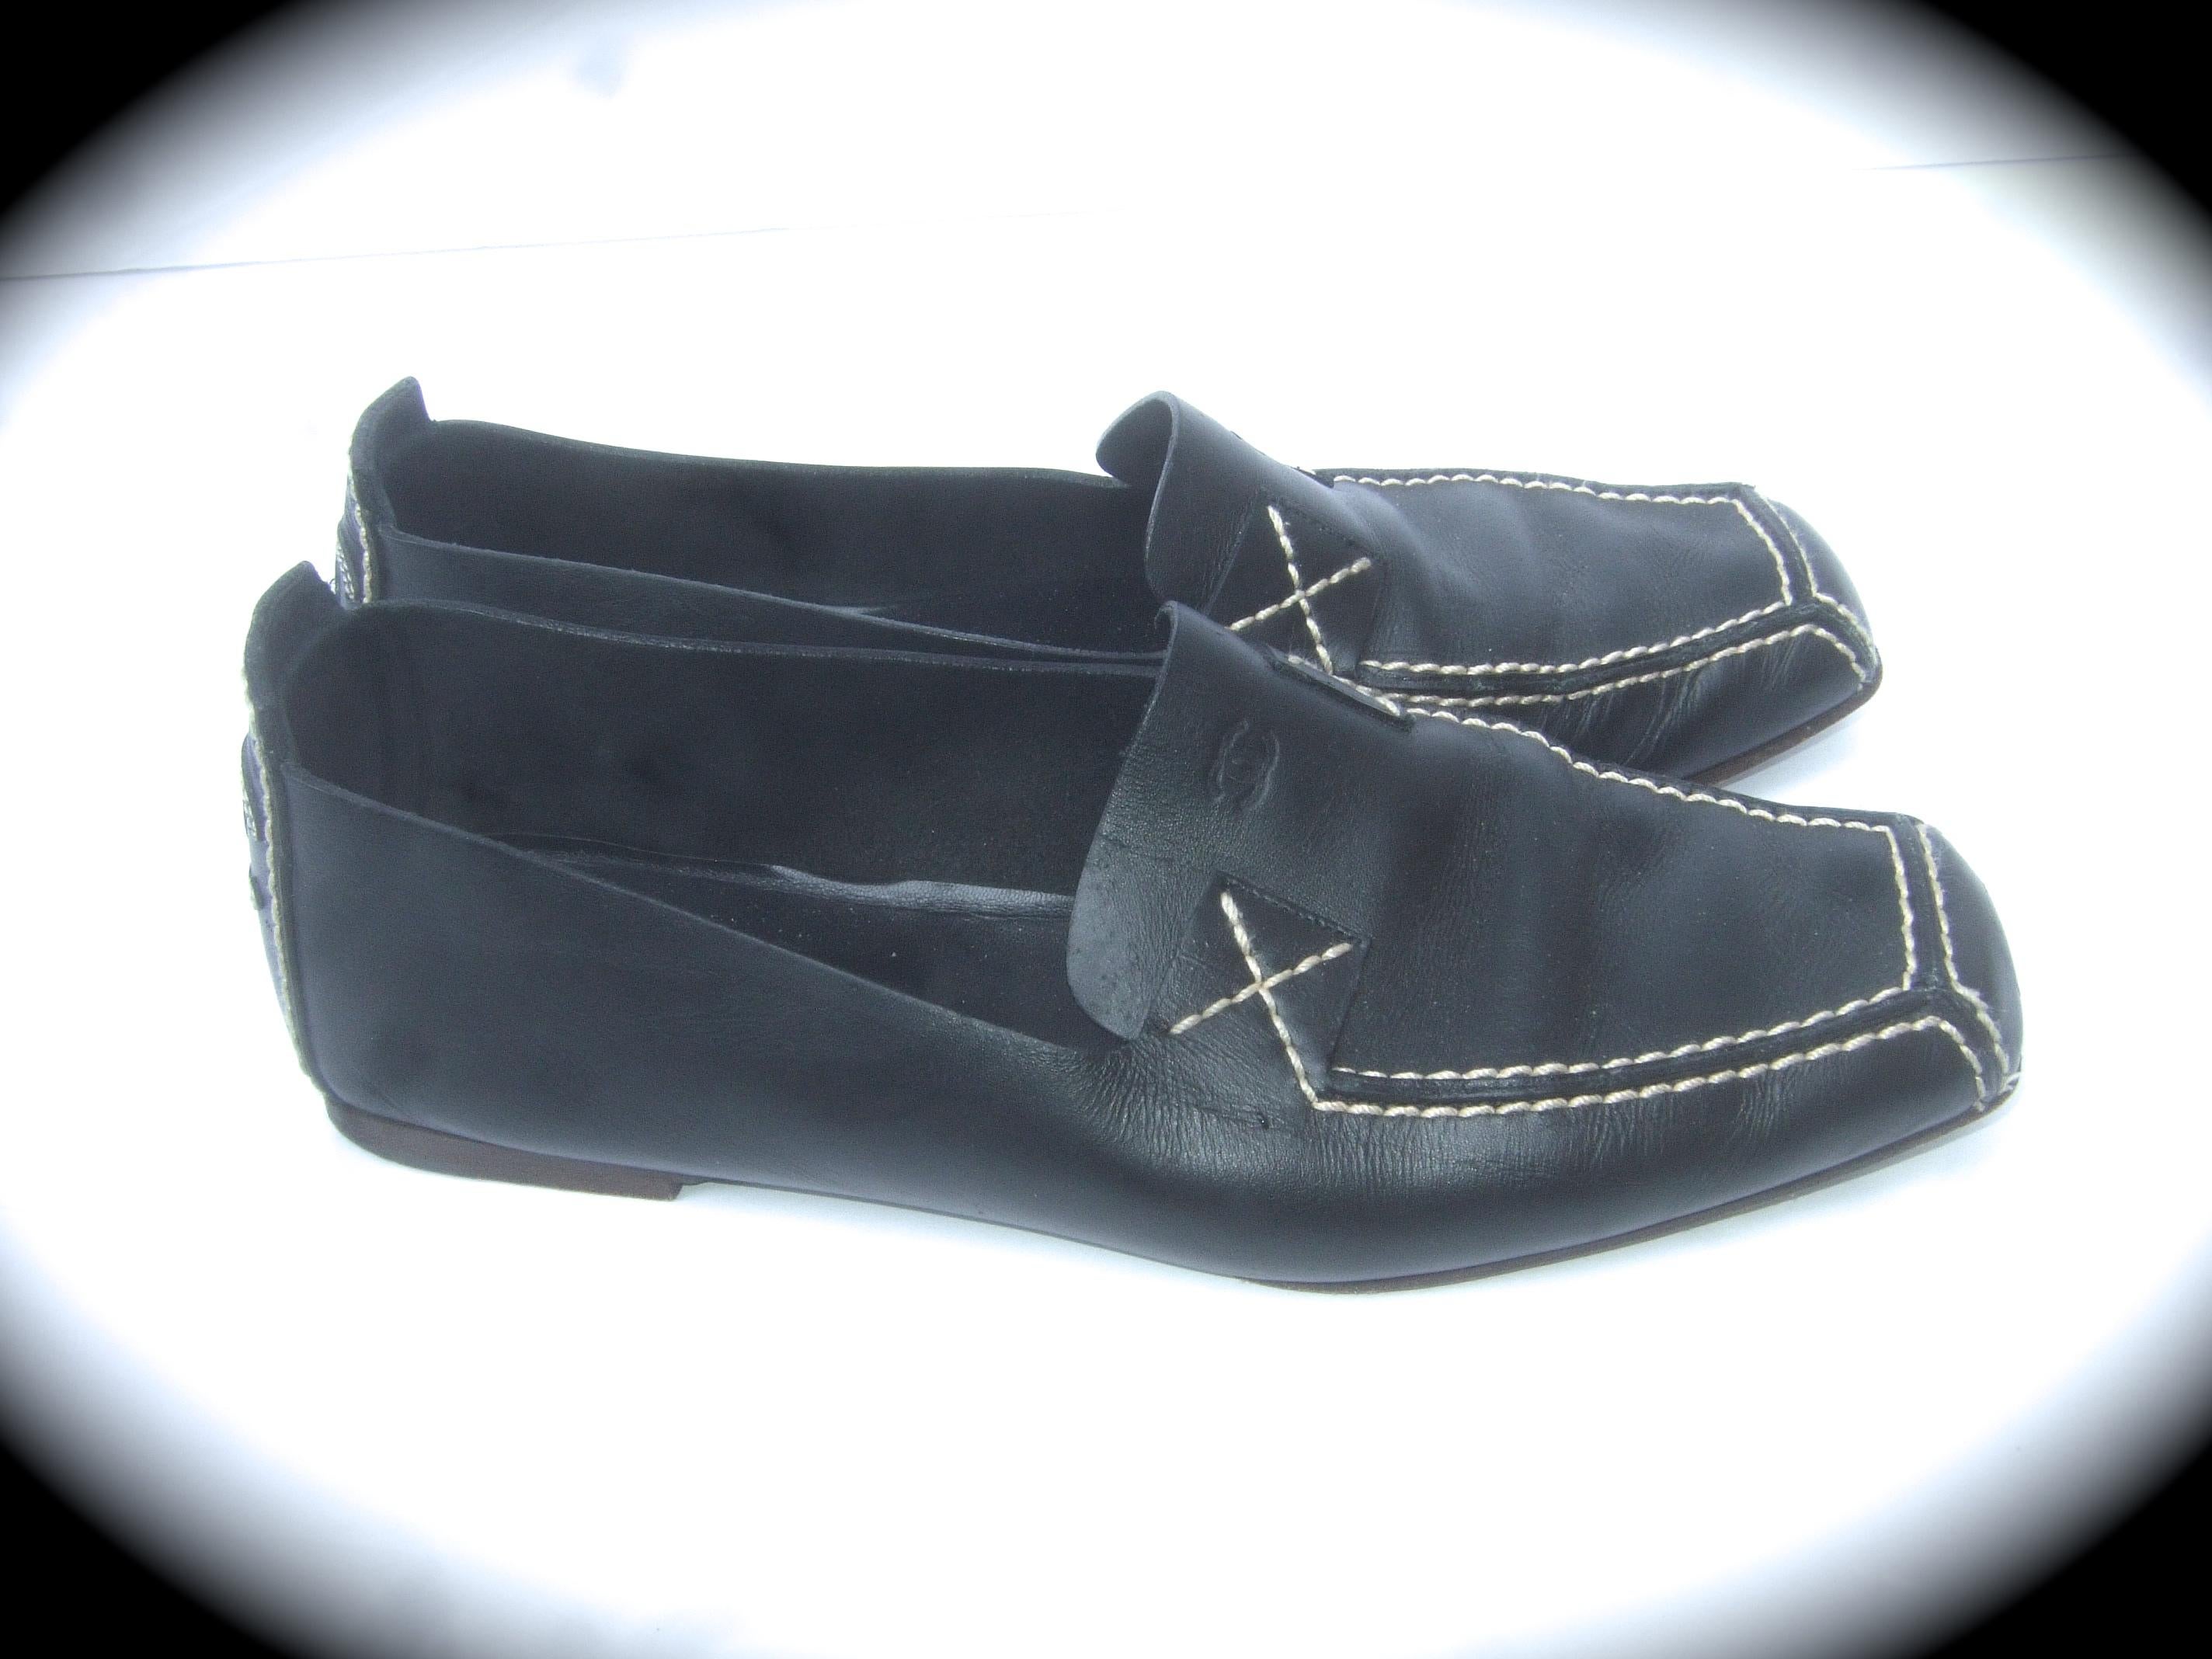 Chanel Black Leather Slip On Italian Low Heel Flats Size 38.5 c 1990s 2